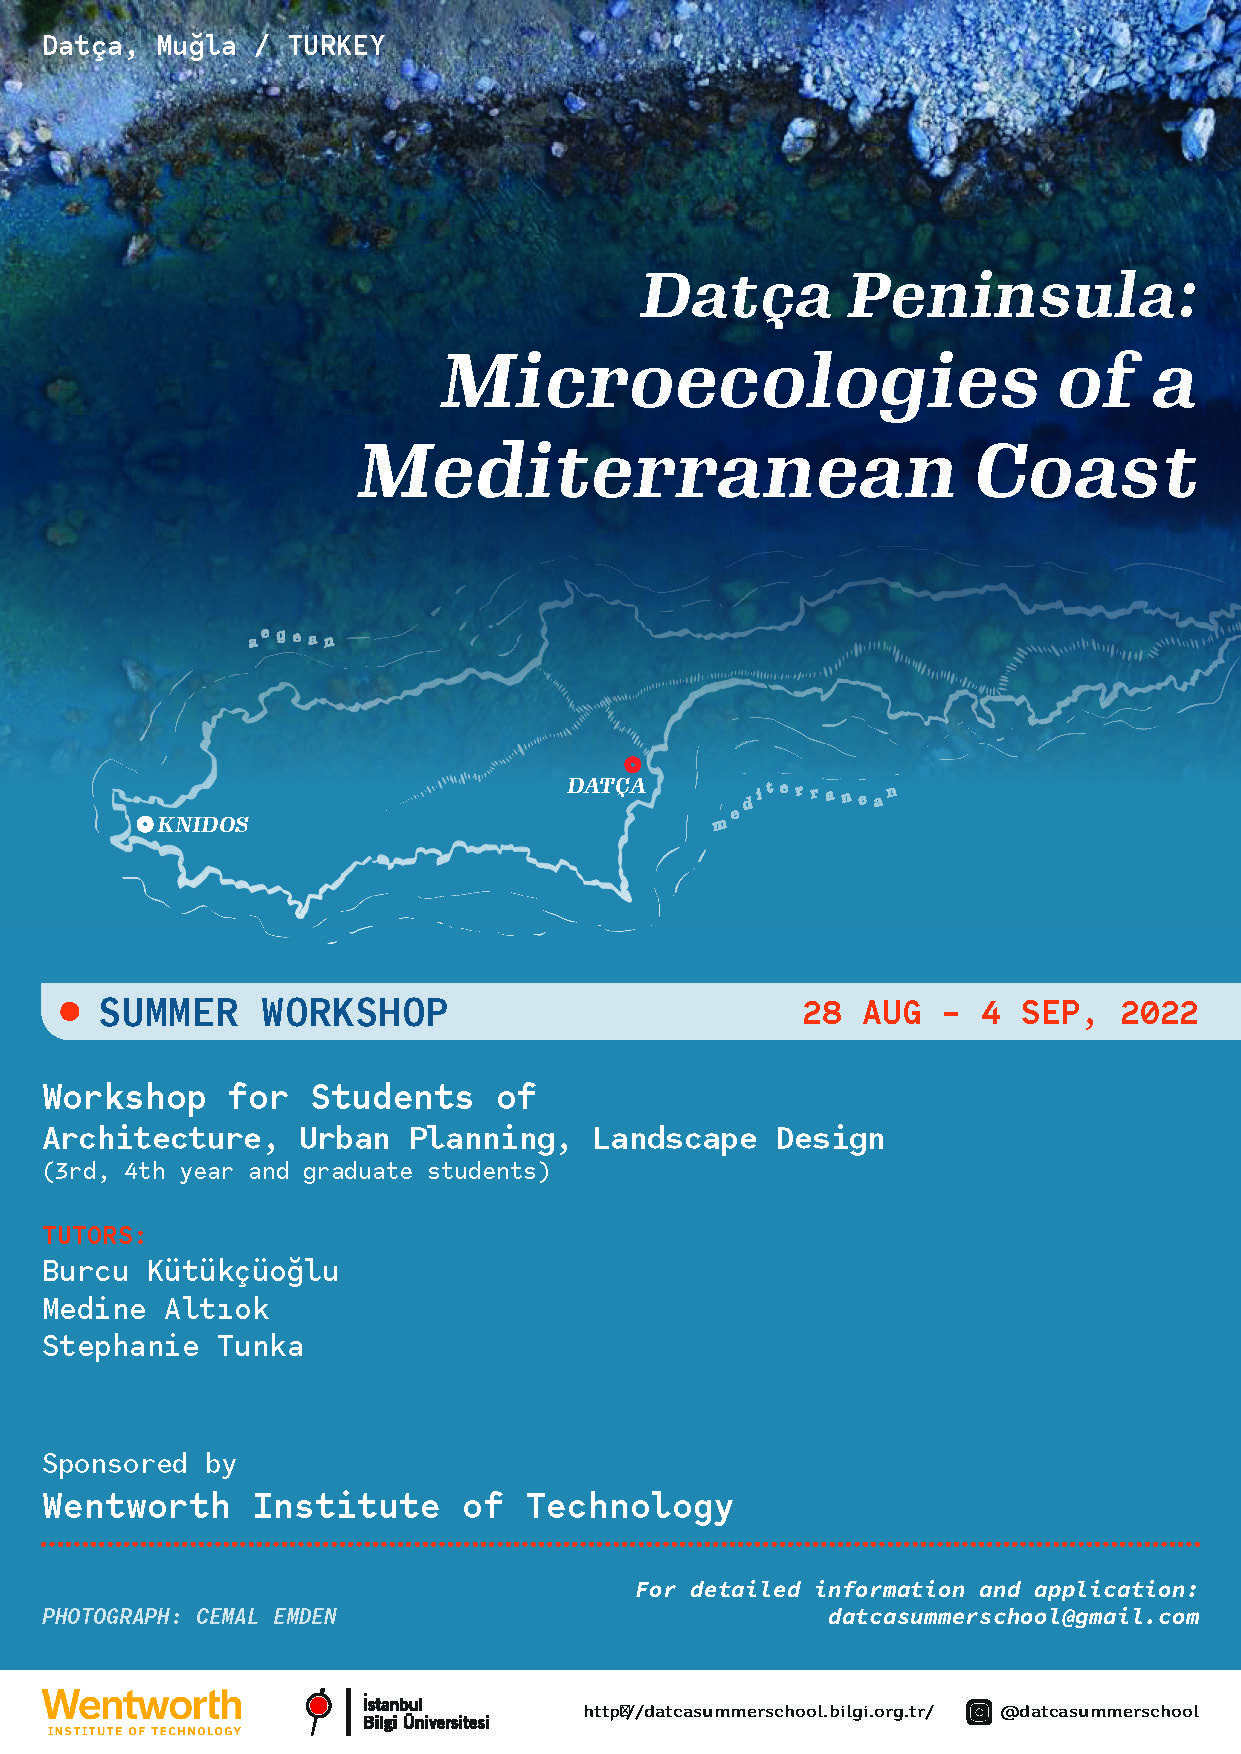 Summer Workshop 2022 Datça Peninsula: Microecologies of a Mediterranean Coast